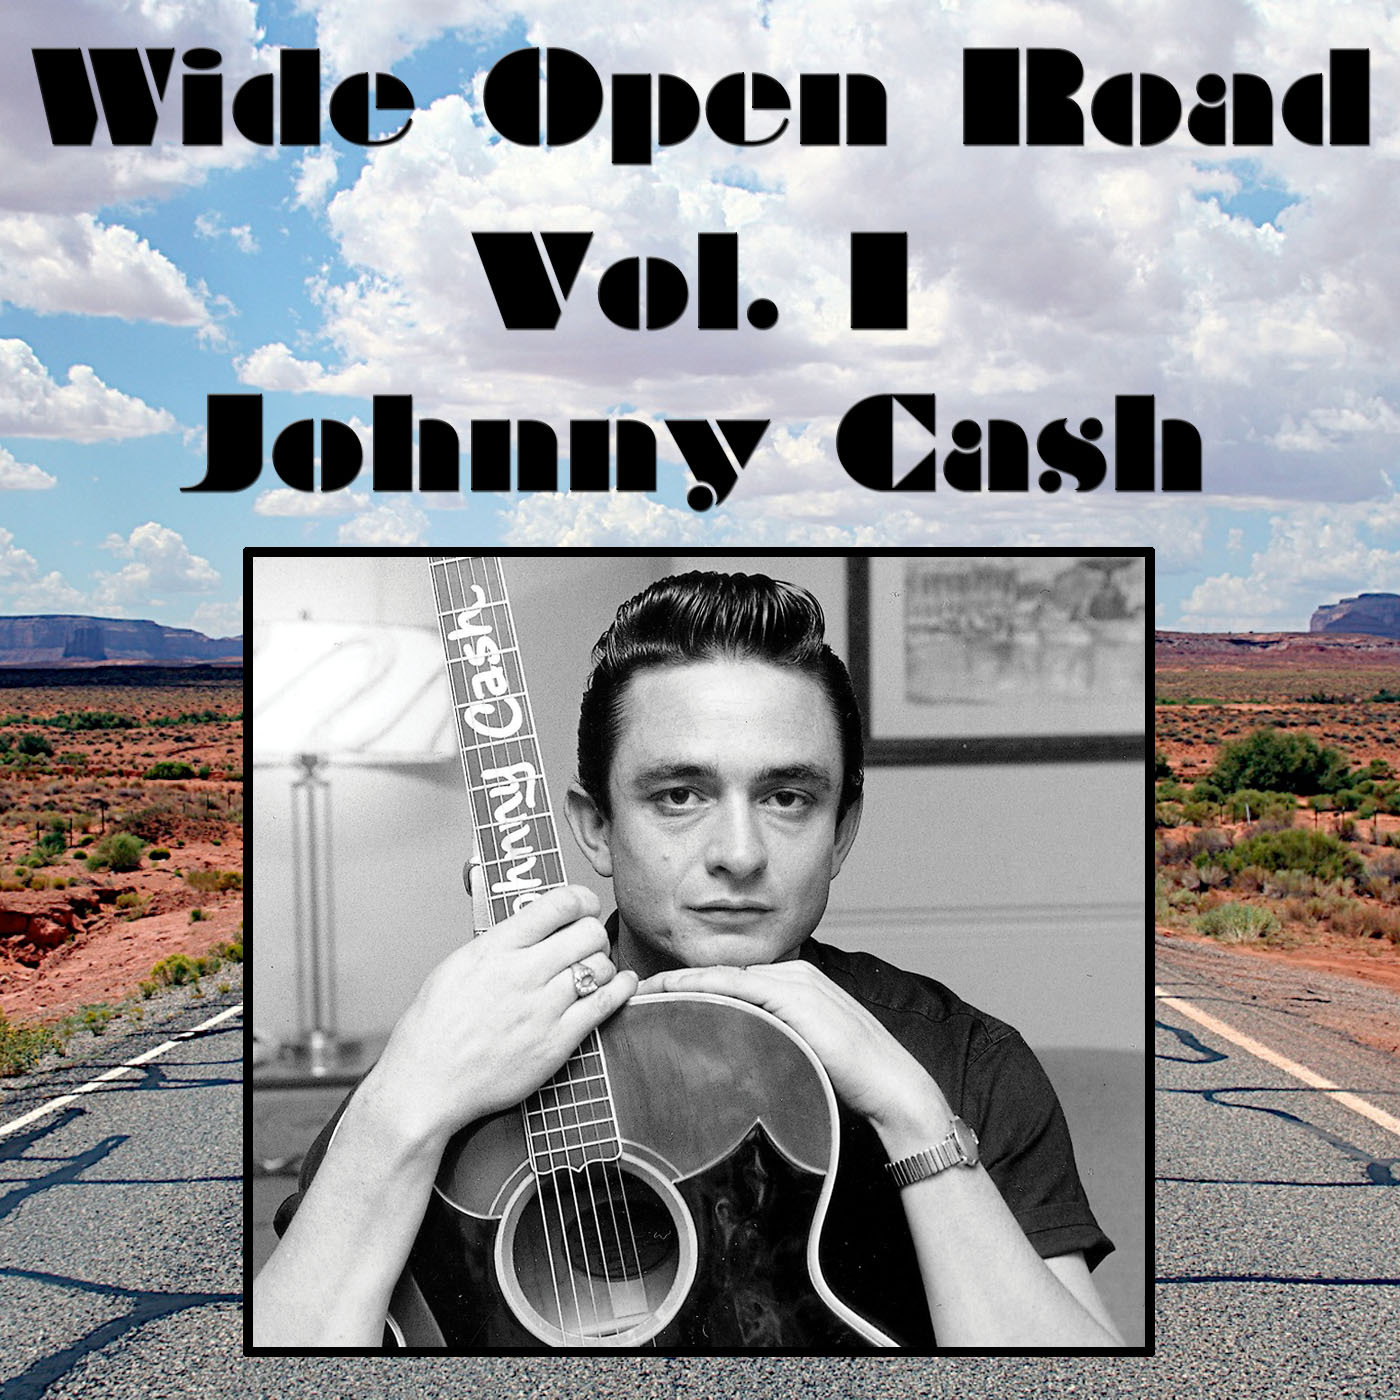 Wide Open Road, Vol. 1